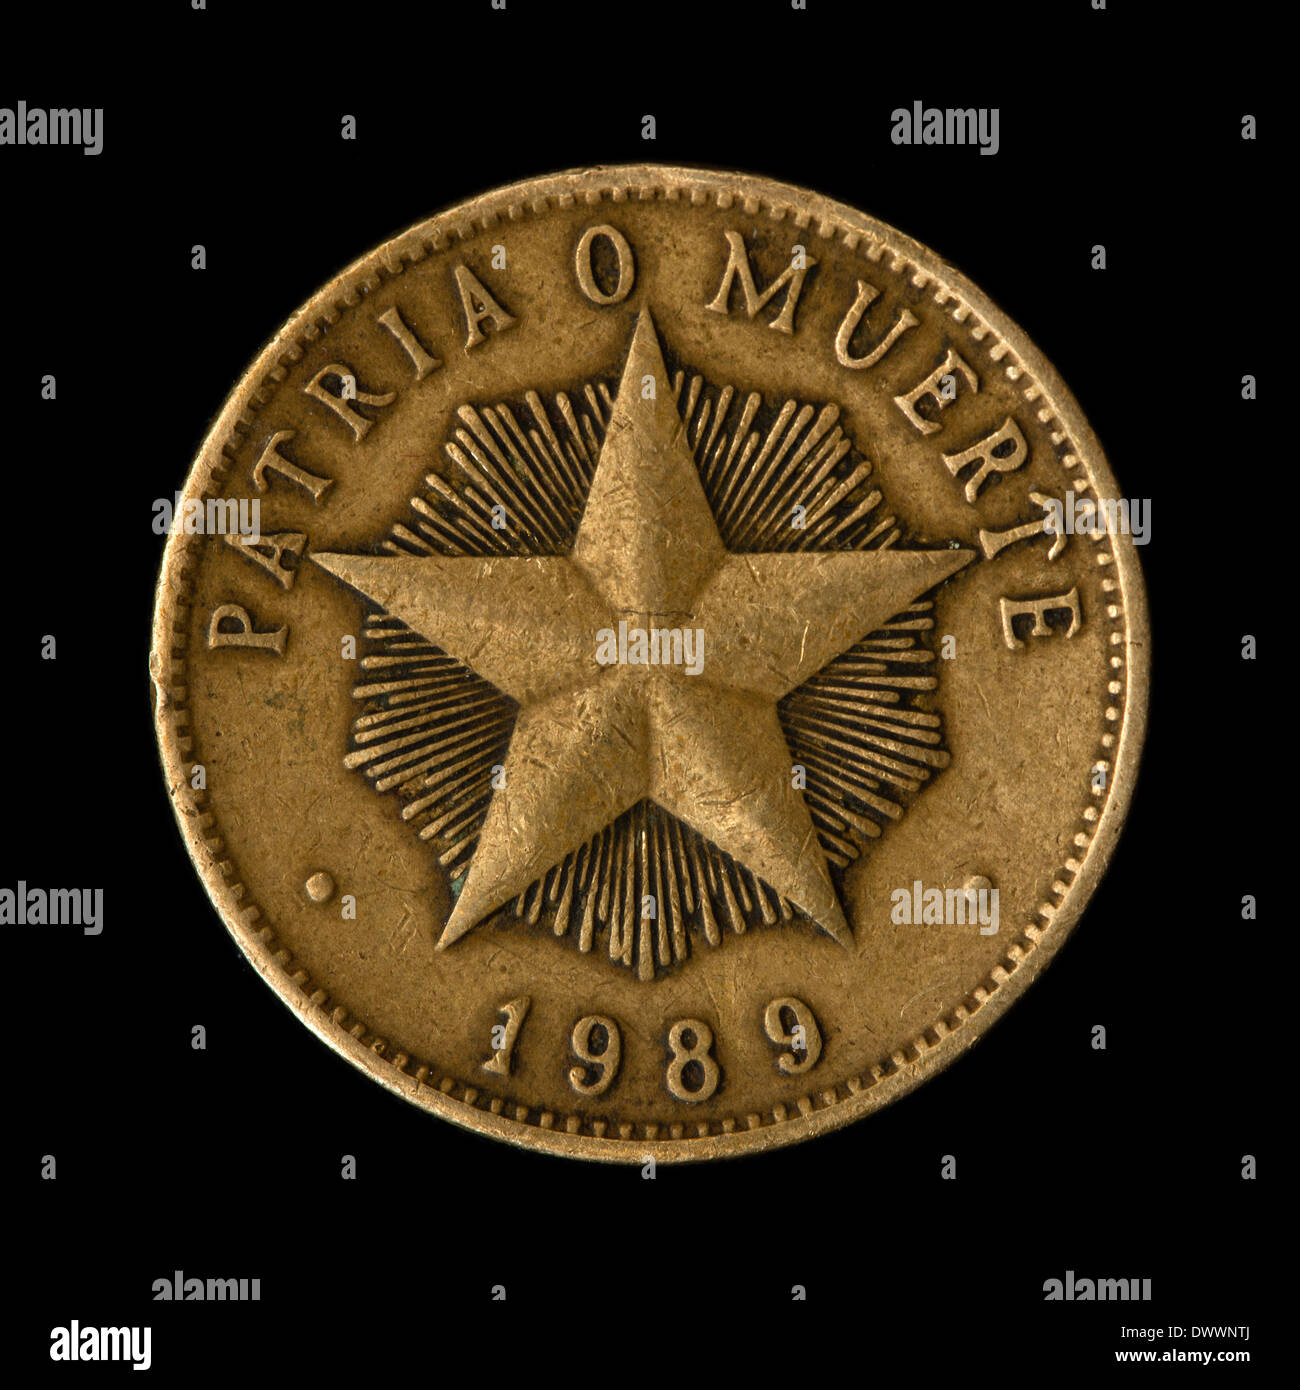 Patria o muerte - one cuban peso coin Stock Photo